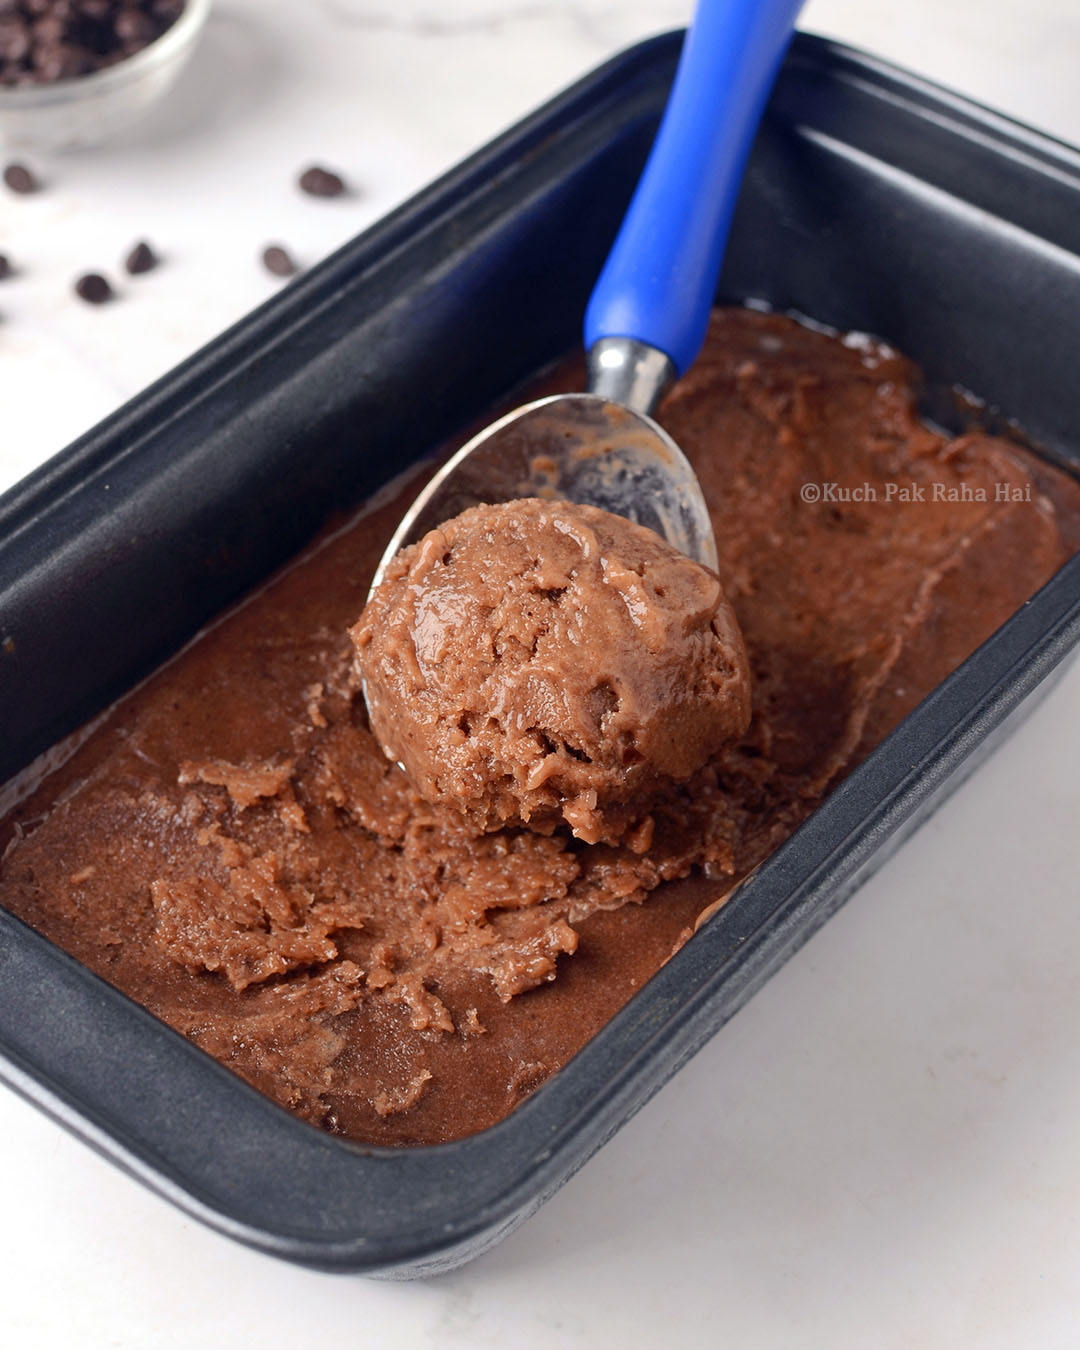 Chocolate banana ice cream scoop.